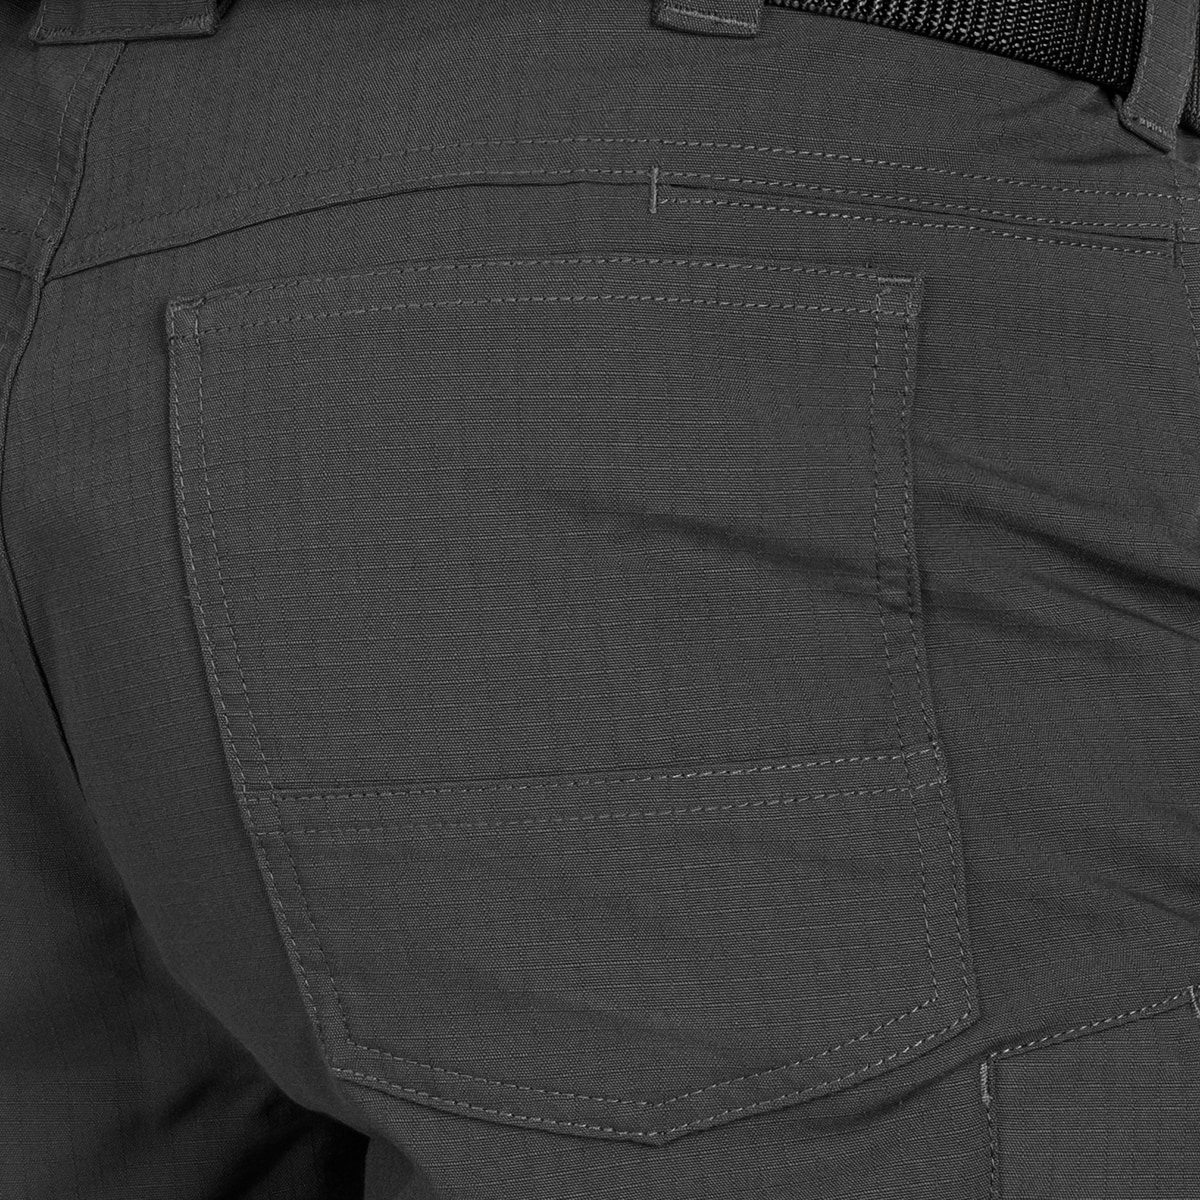 Spodnie Tru-Spec Pro Vector 24/7 PR - Black